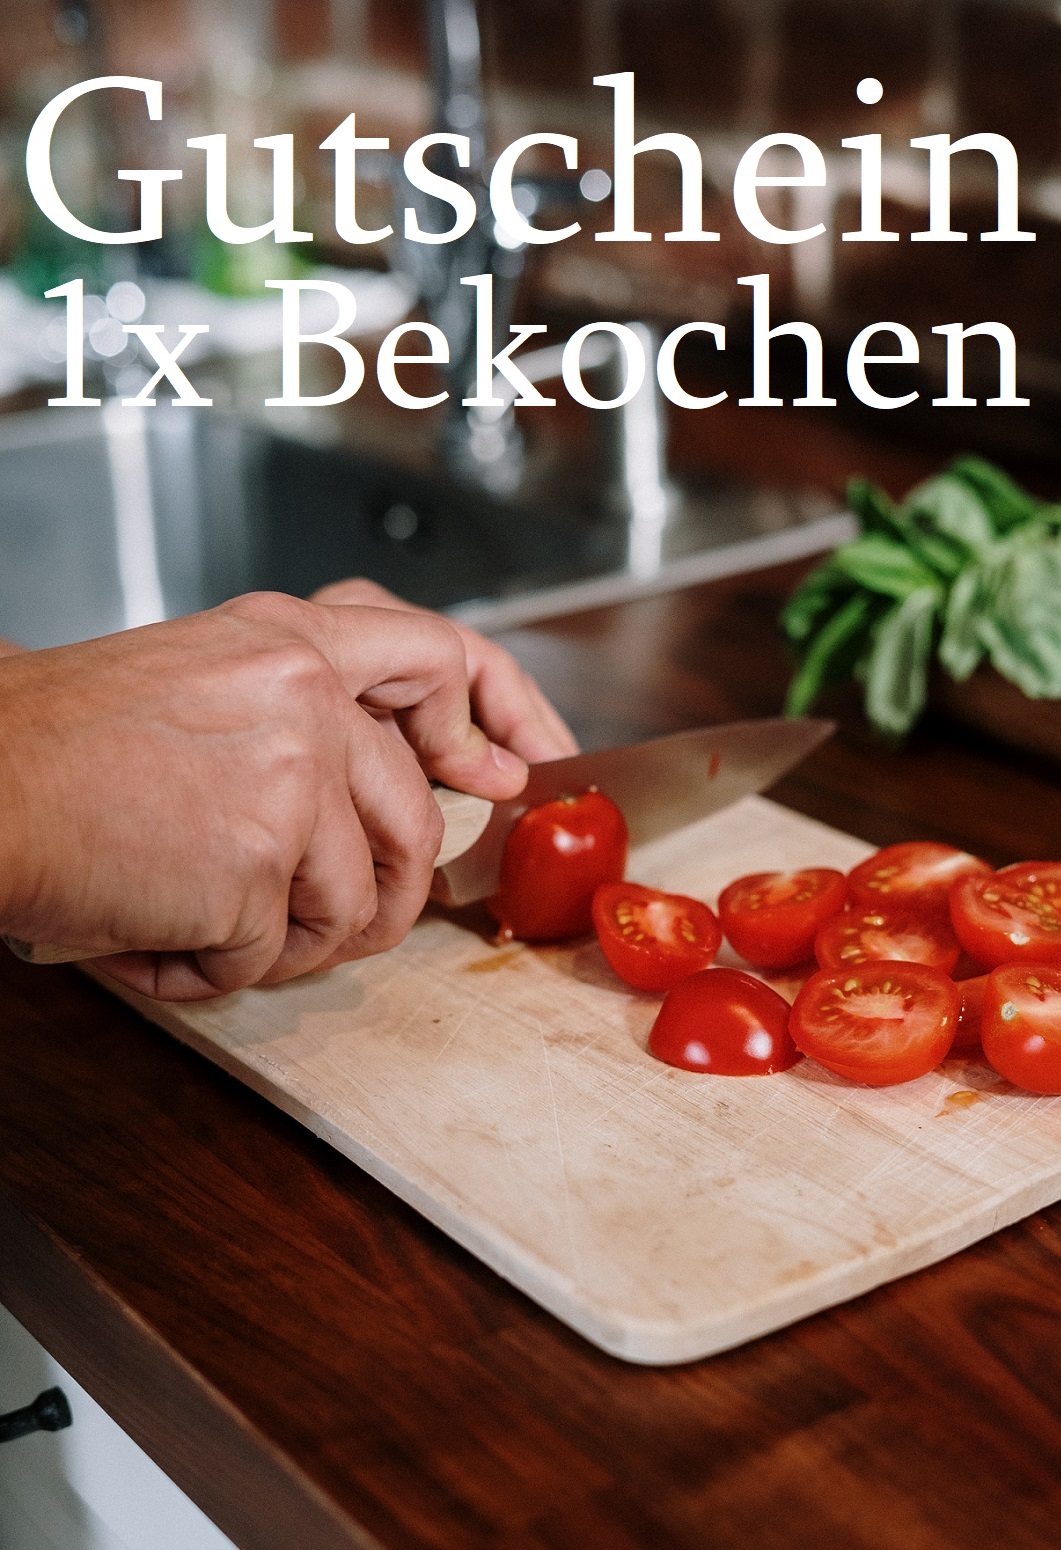 Kochen: Freunde & Bekannte bekochen | Gutscheinspruch.de